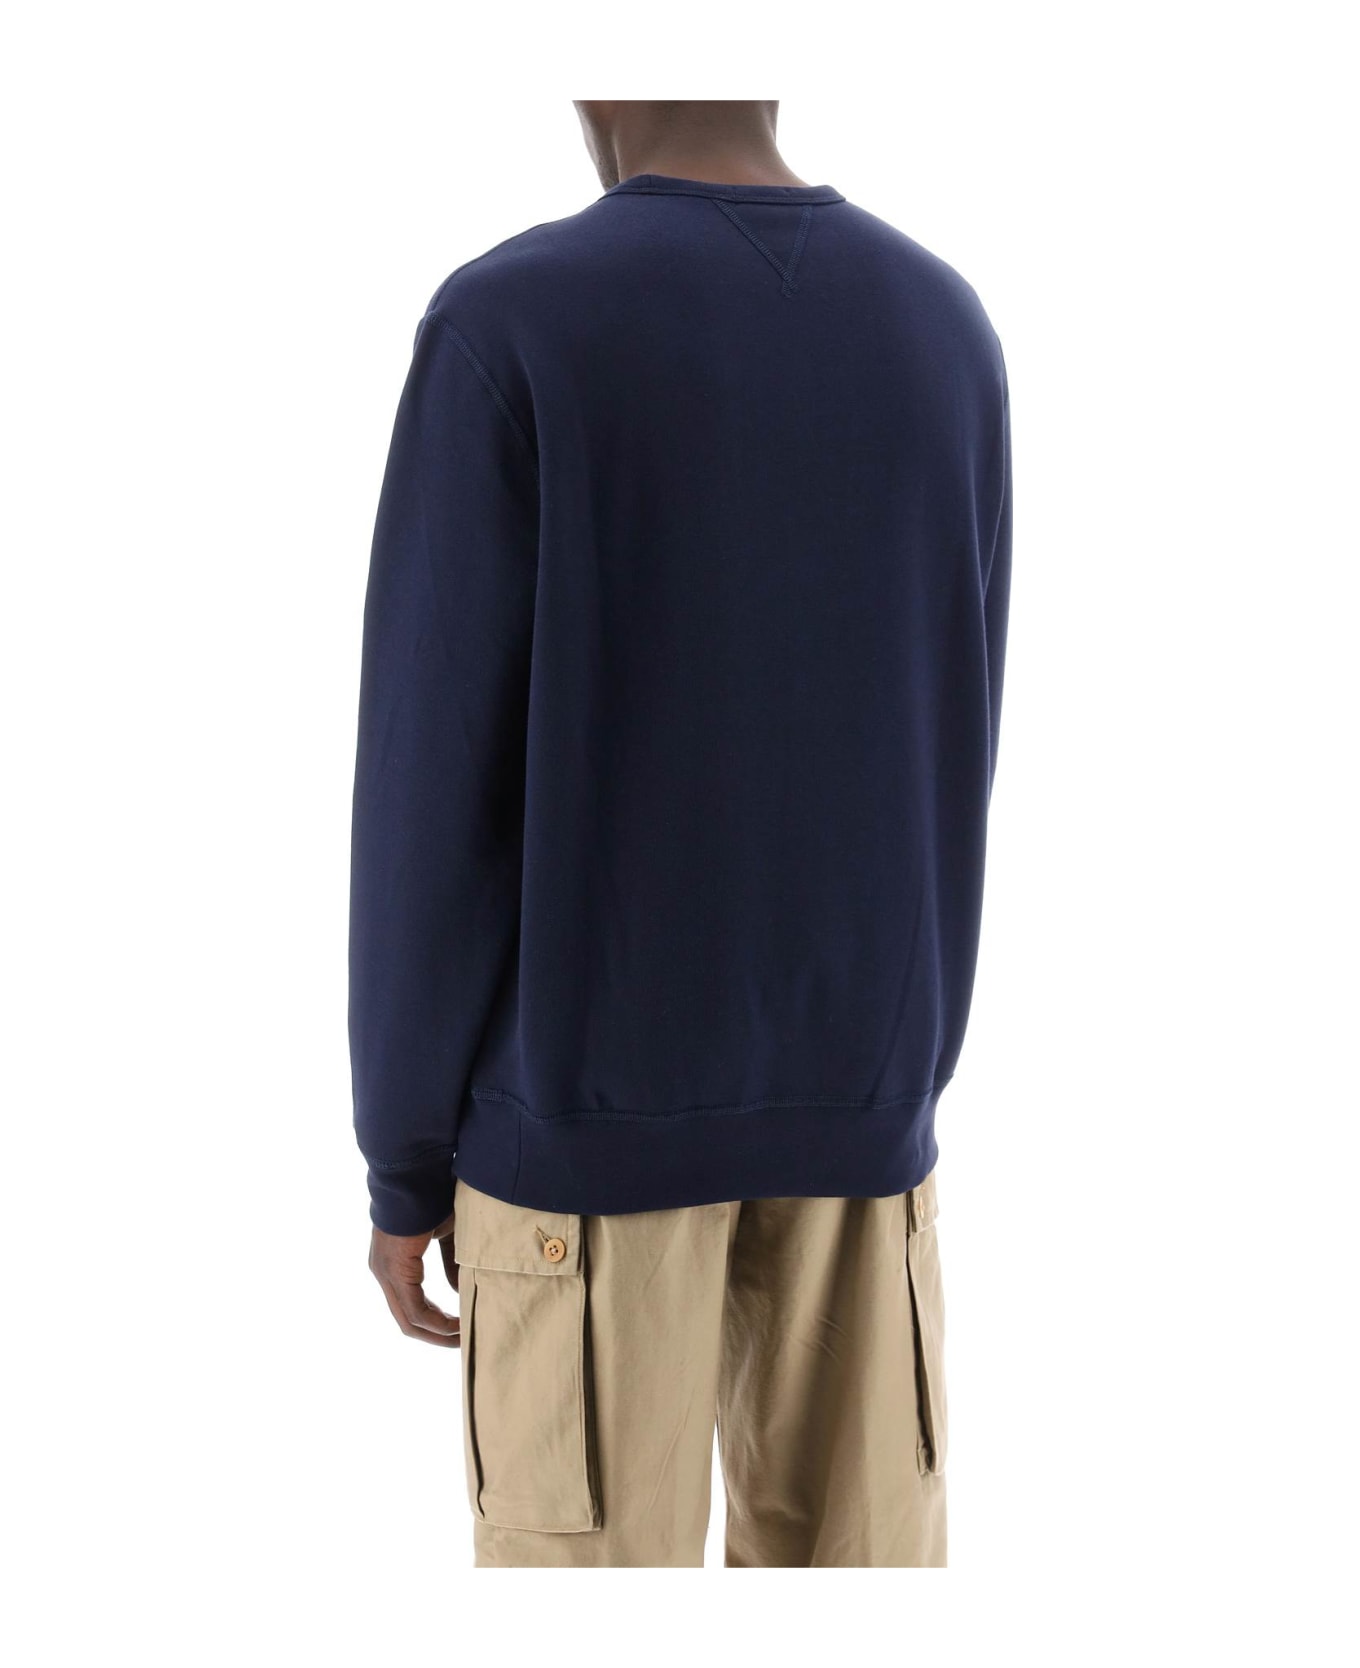 Polo Ralph Lauren Rl Sweatshirt - CRUISE NAVY (Blue)